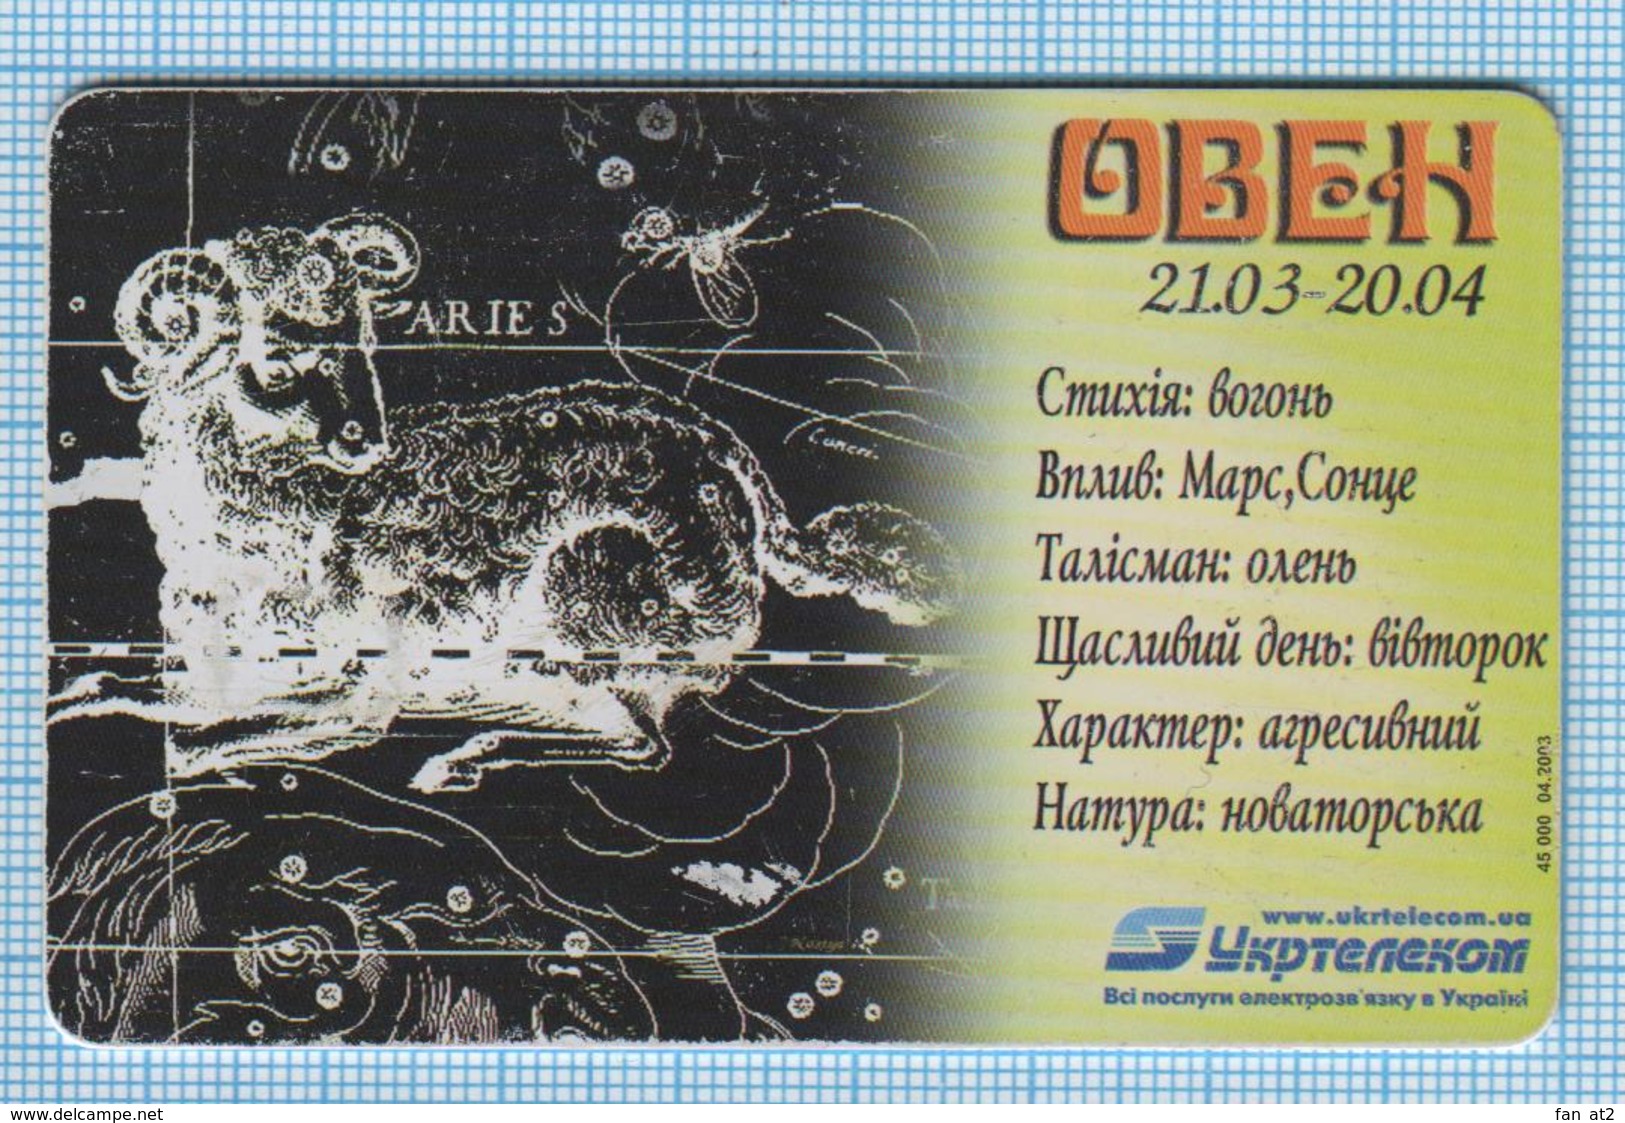 UKRAINE / Ivano-Frankivsk  / Phonecard Ukrtelecom / Phone Card Aries / Zodiac Sign Horoscope. Constellation 04/03. - Ukraine